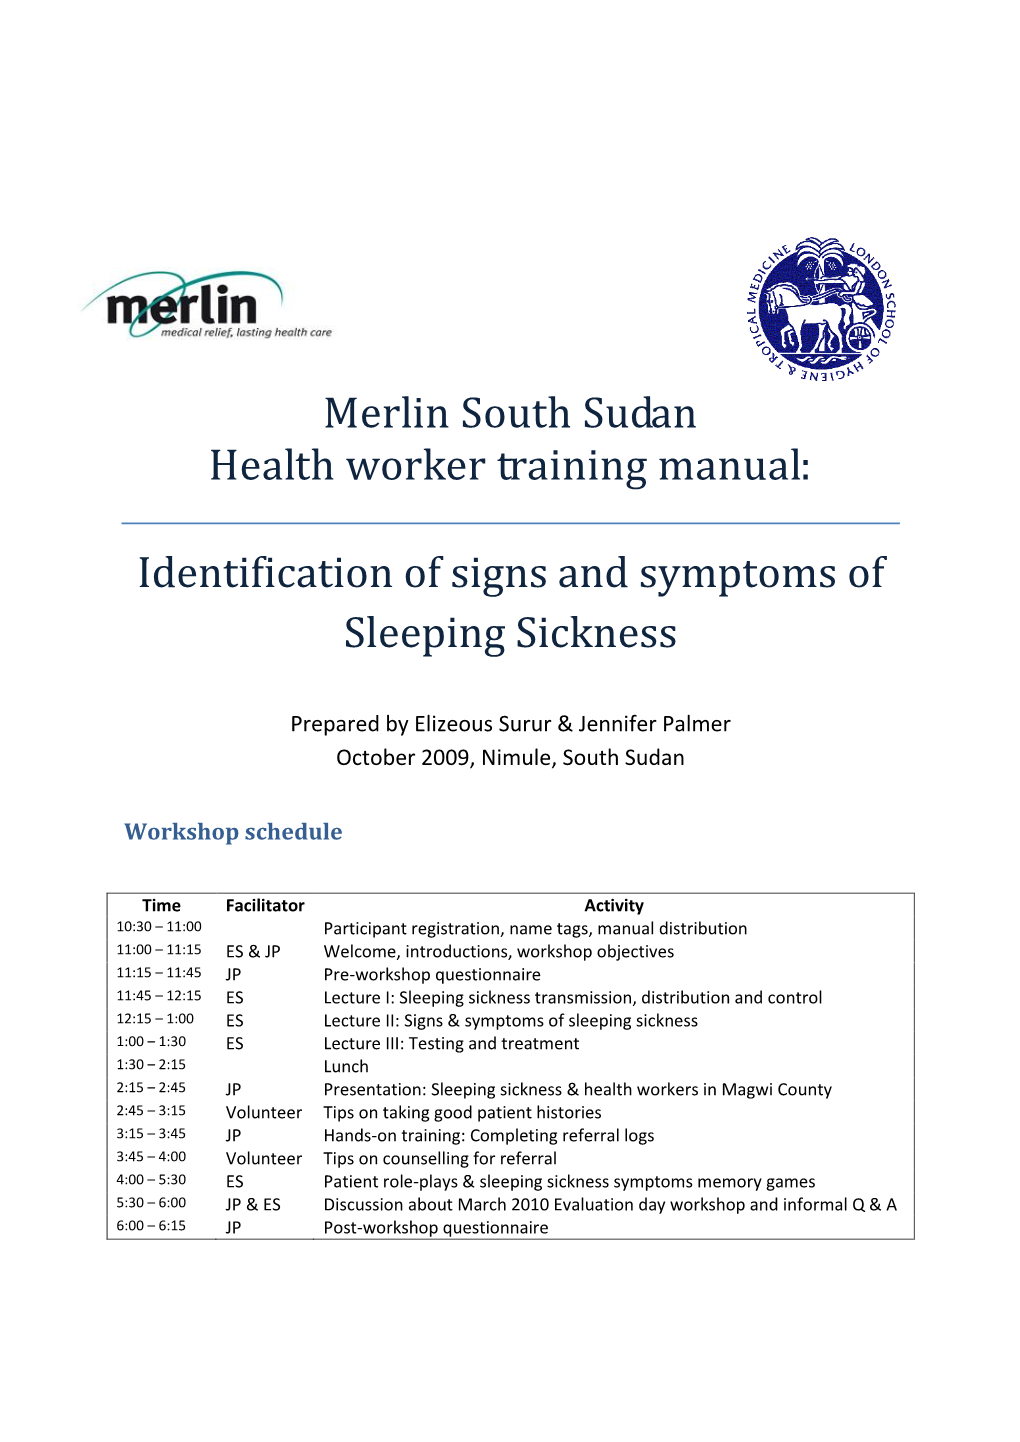 Merlin South Sudan Health Worker Training Manual